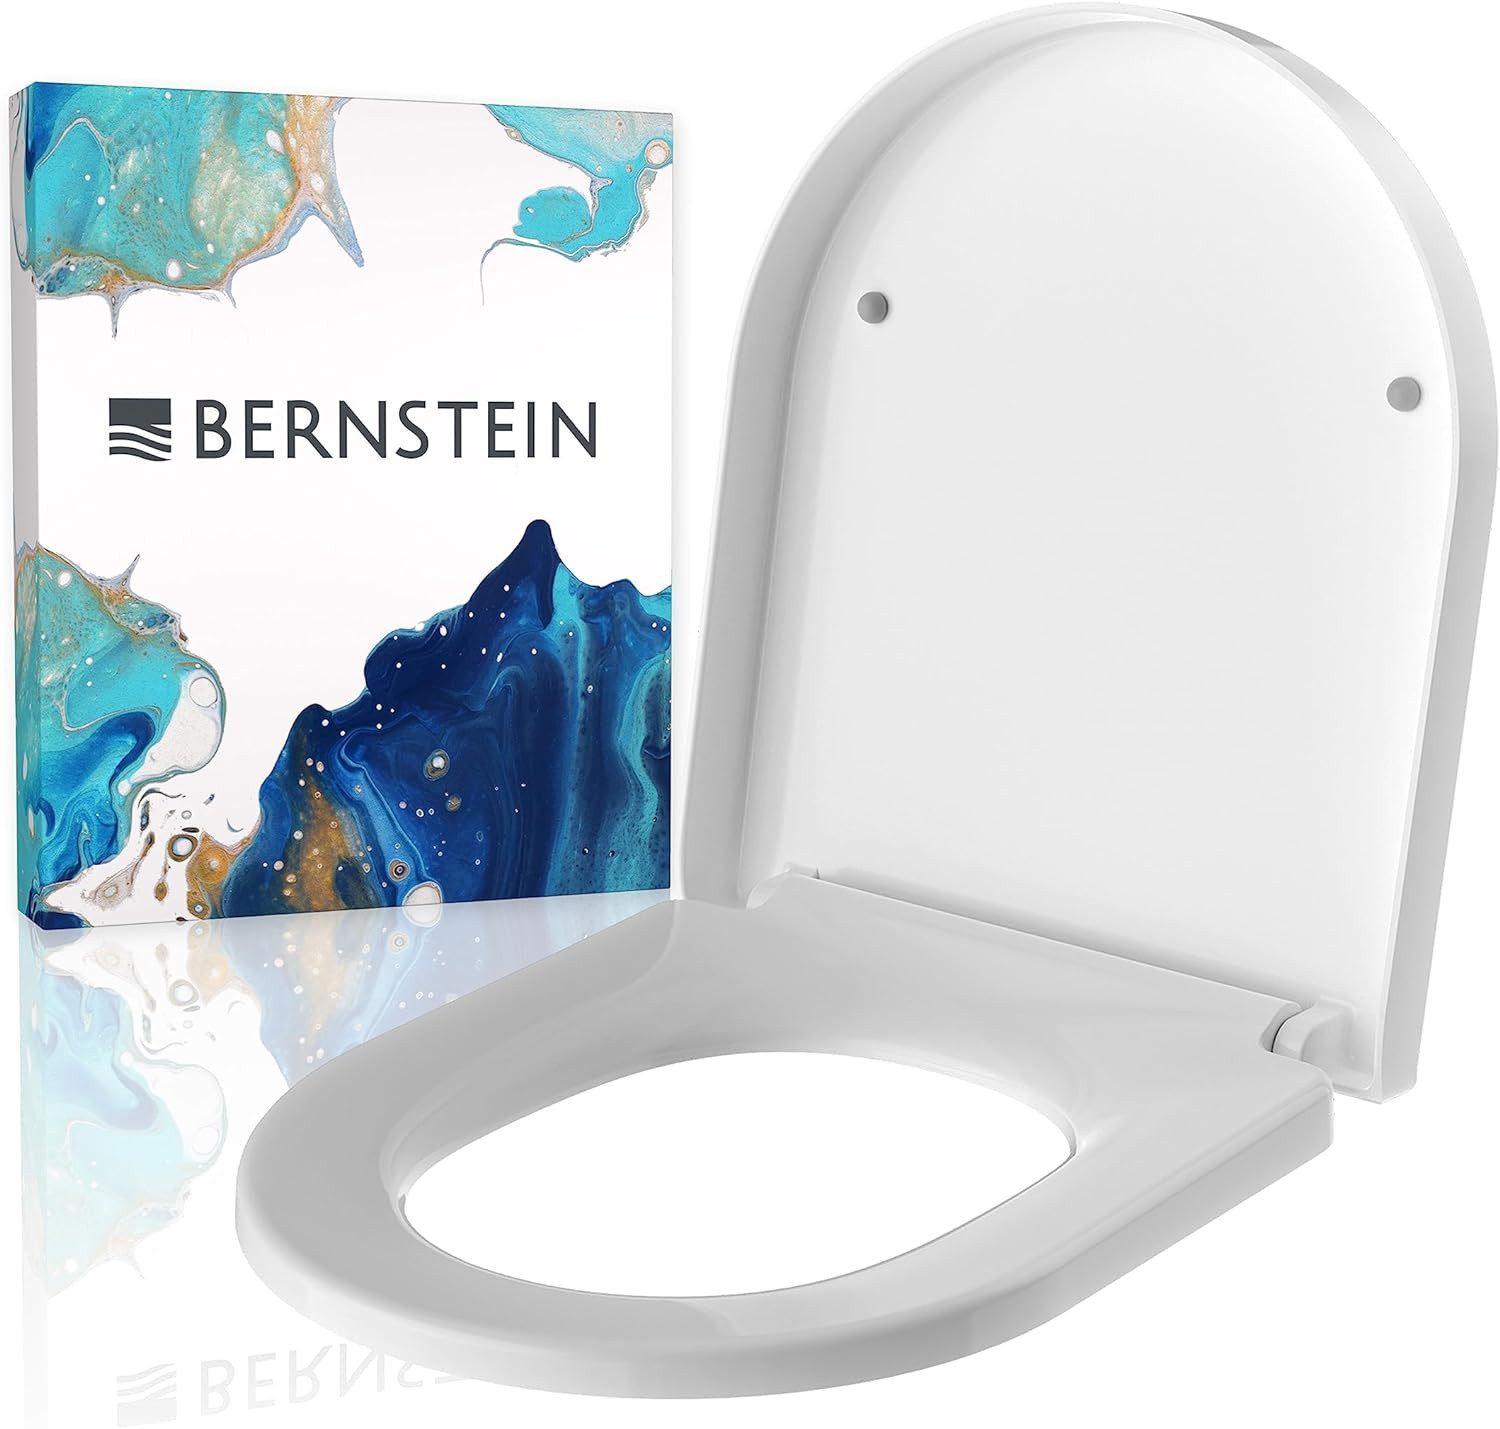 Bernstein WC-Sitz U1009 (Komplett-Set, inkl. Befestigungsmaterial), weiß / D-Form / Absenkautomatik / aus Duroplast / abnehmbar